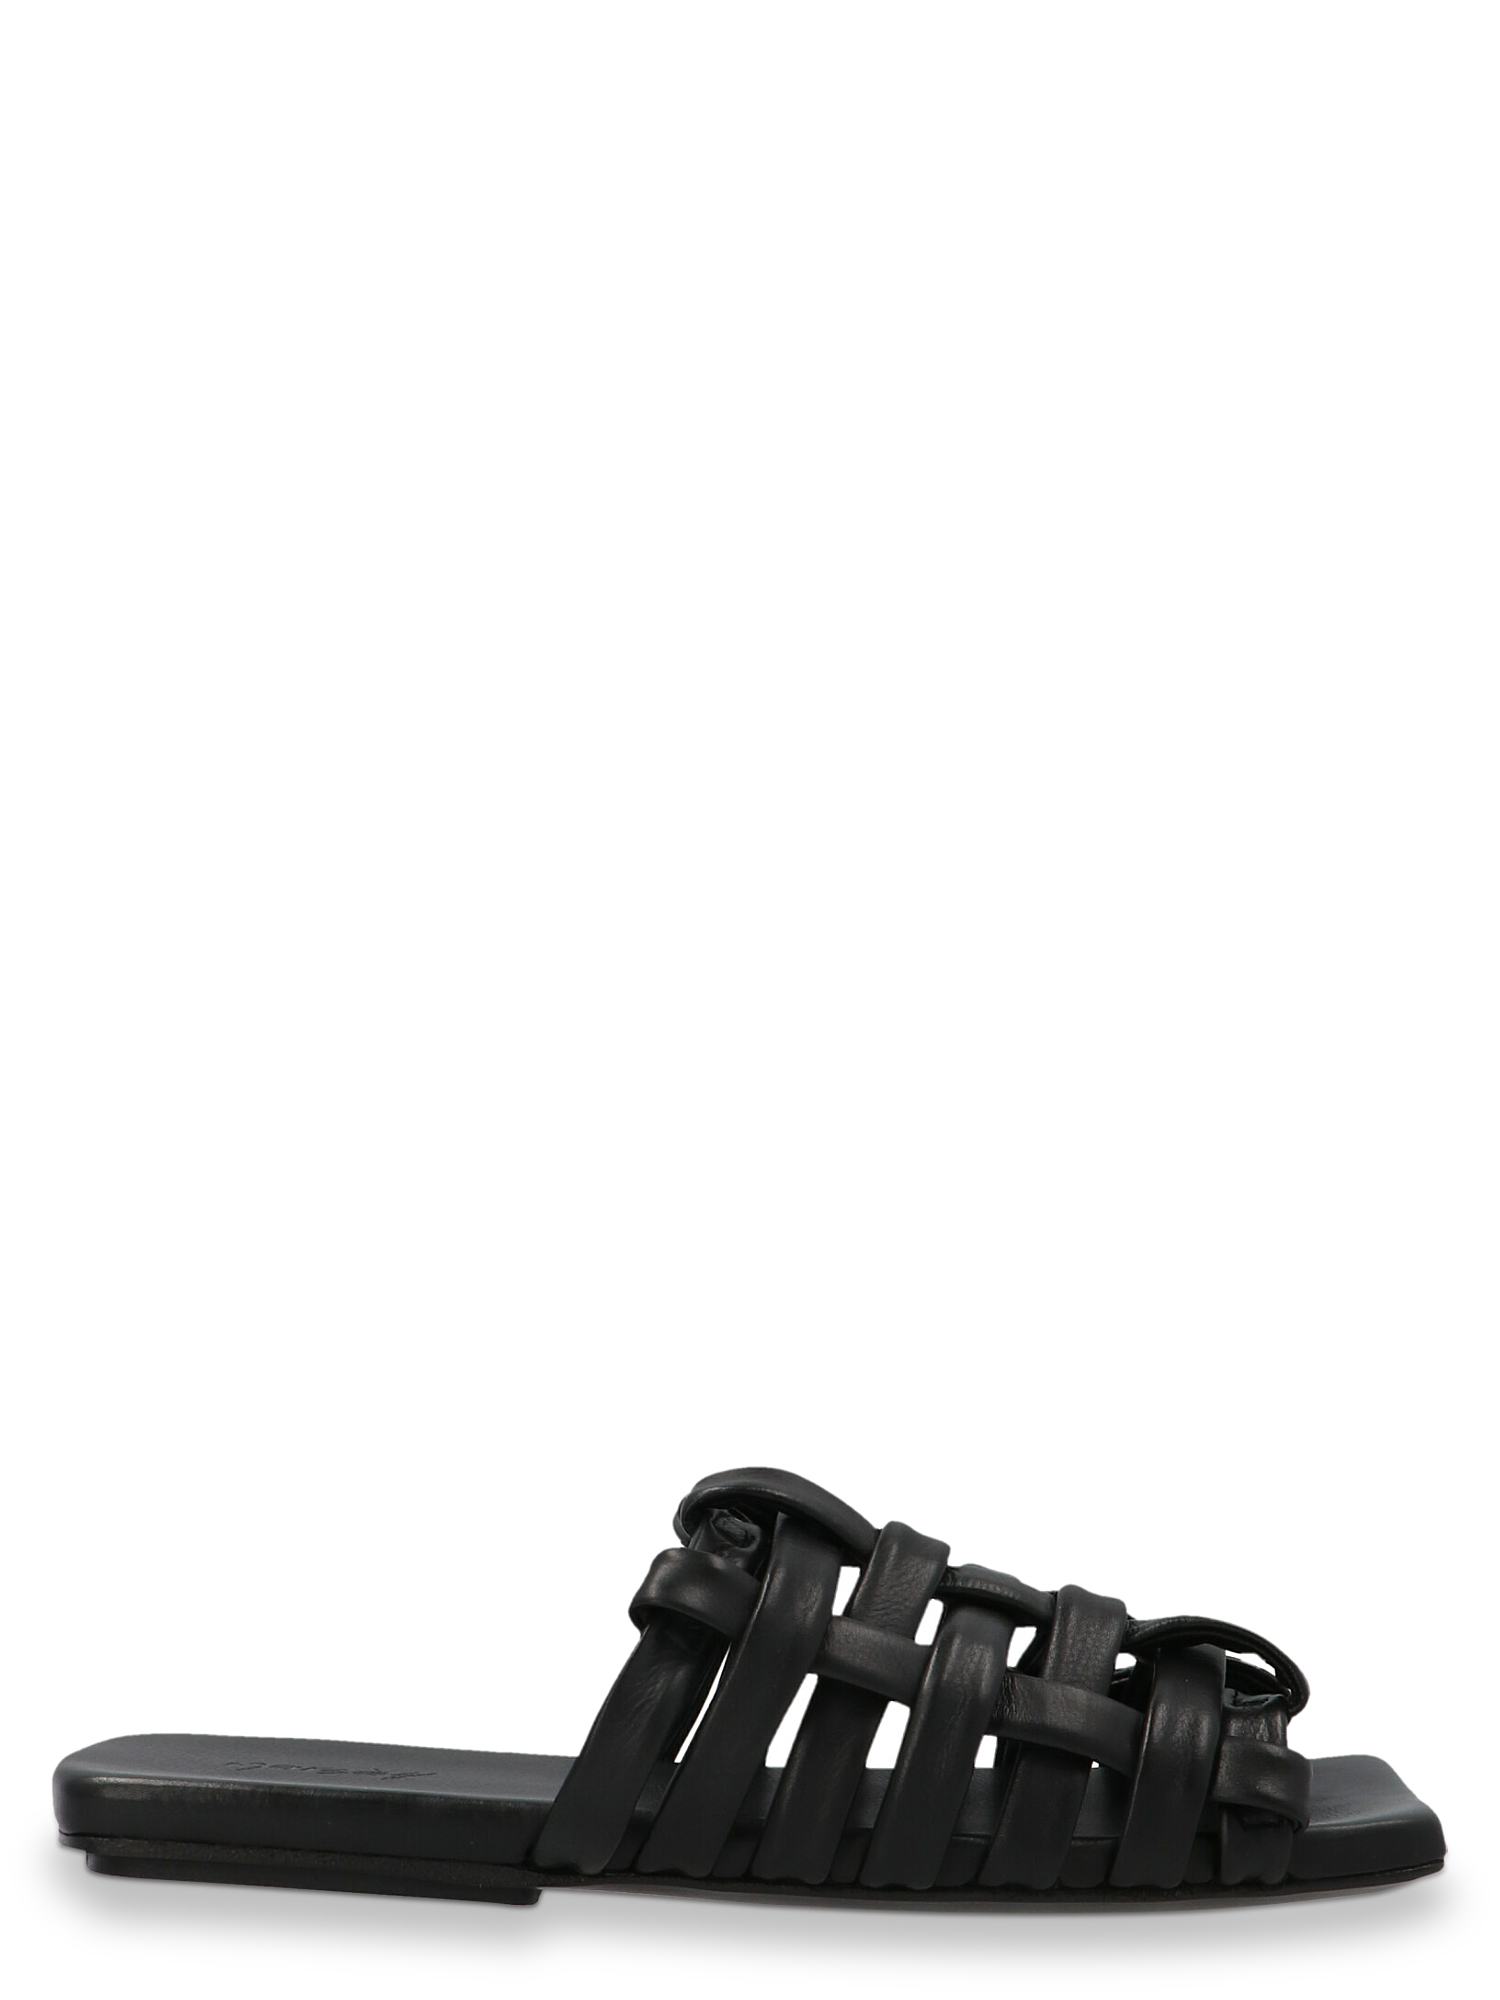 Sandales Pour Femme - Marsell - En Leather Black - Taille: IT 36 - EU 36